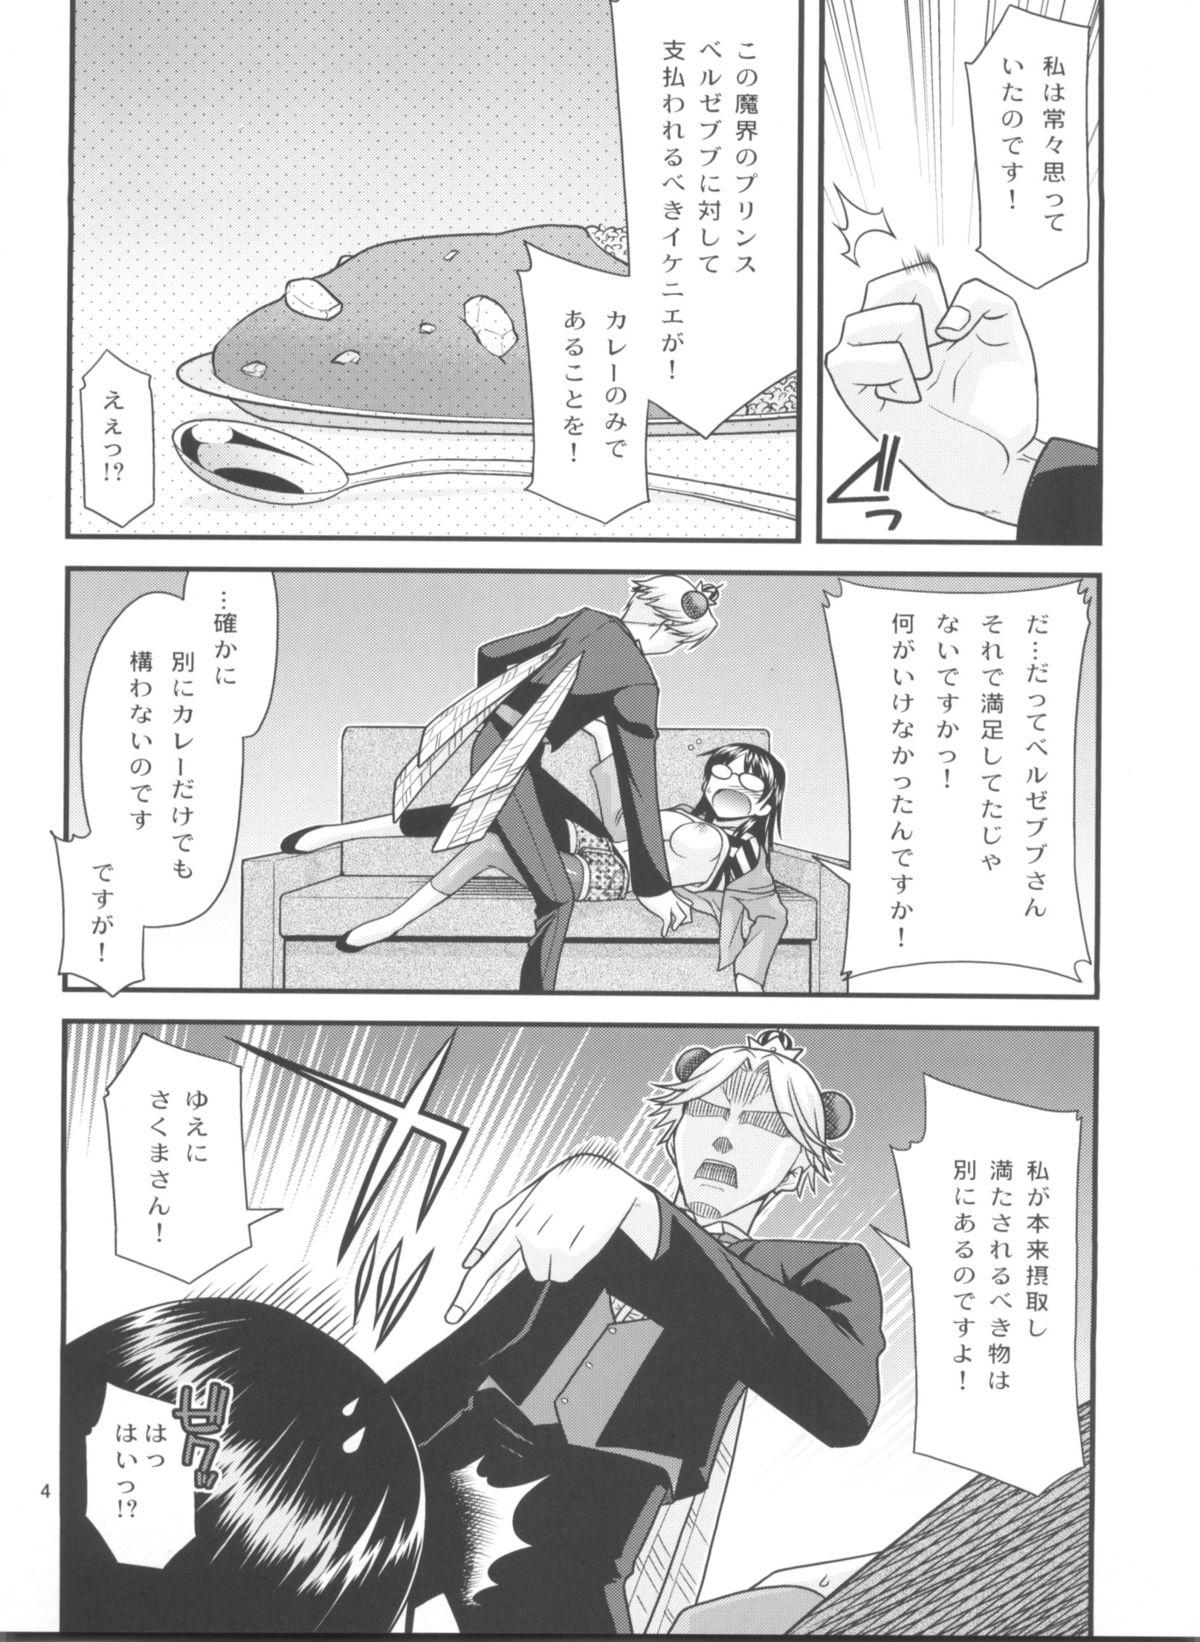 Strapon Itadakimasuyo, Sakuma-san. - Yondemasuyo azazel-san Japan - Page 3